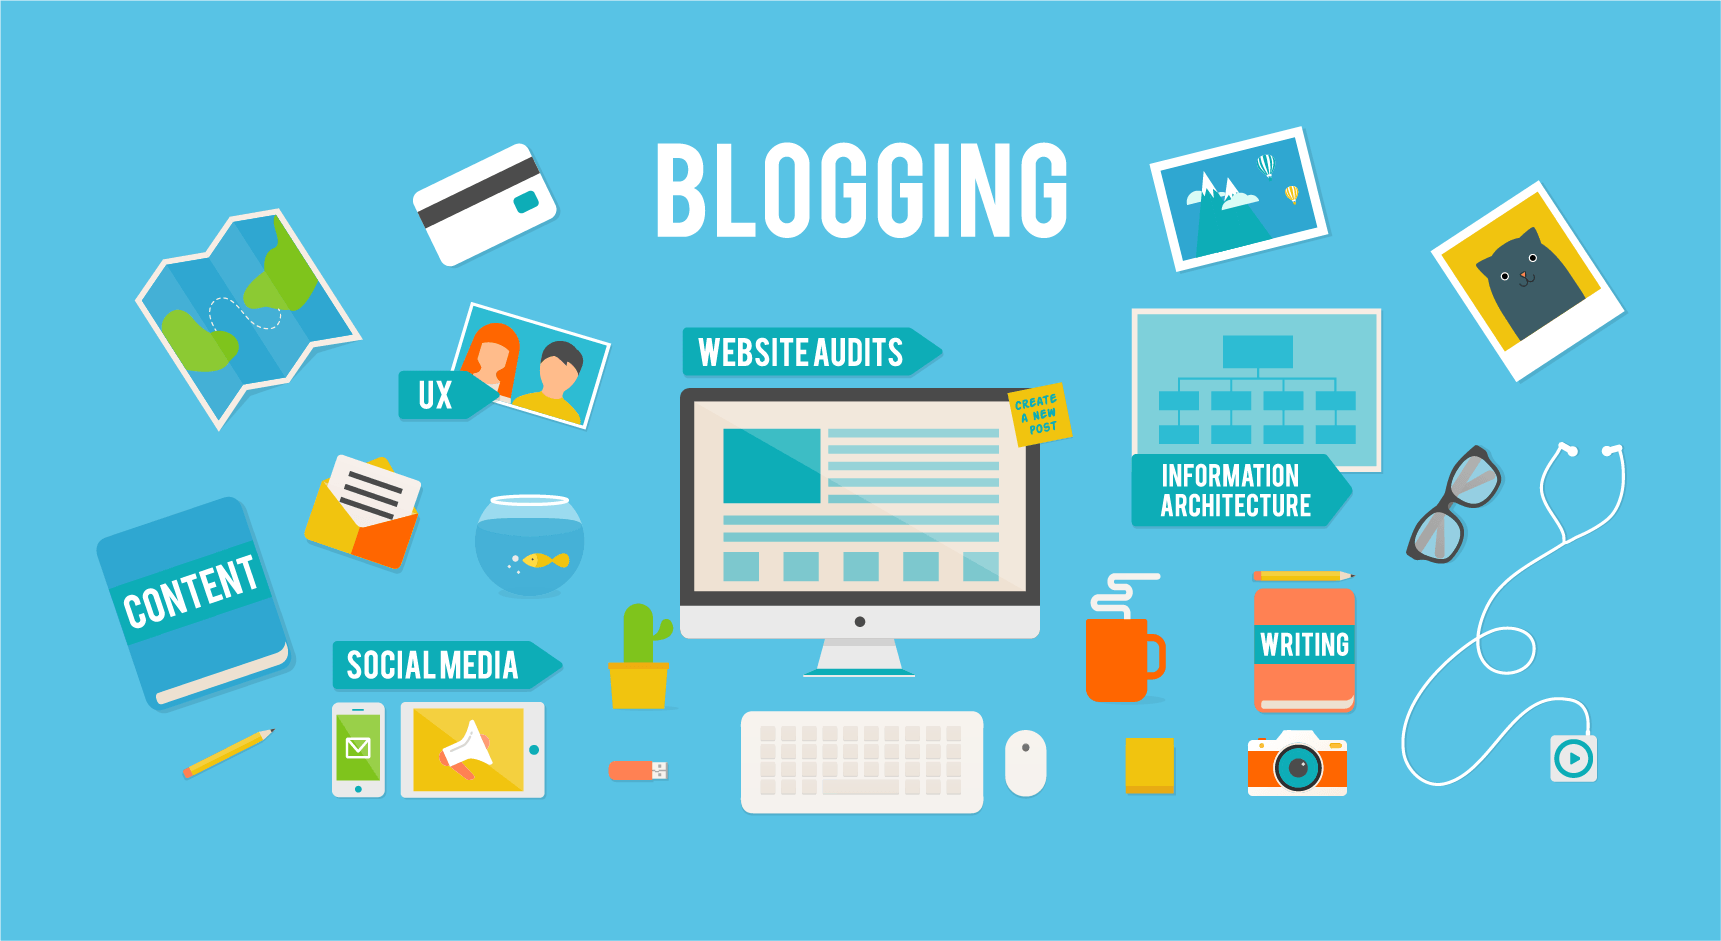 Ways to improve your blog